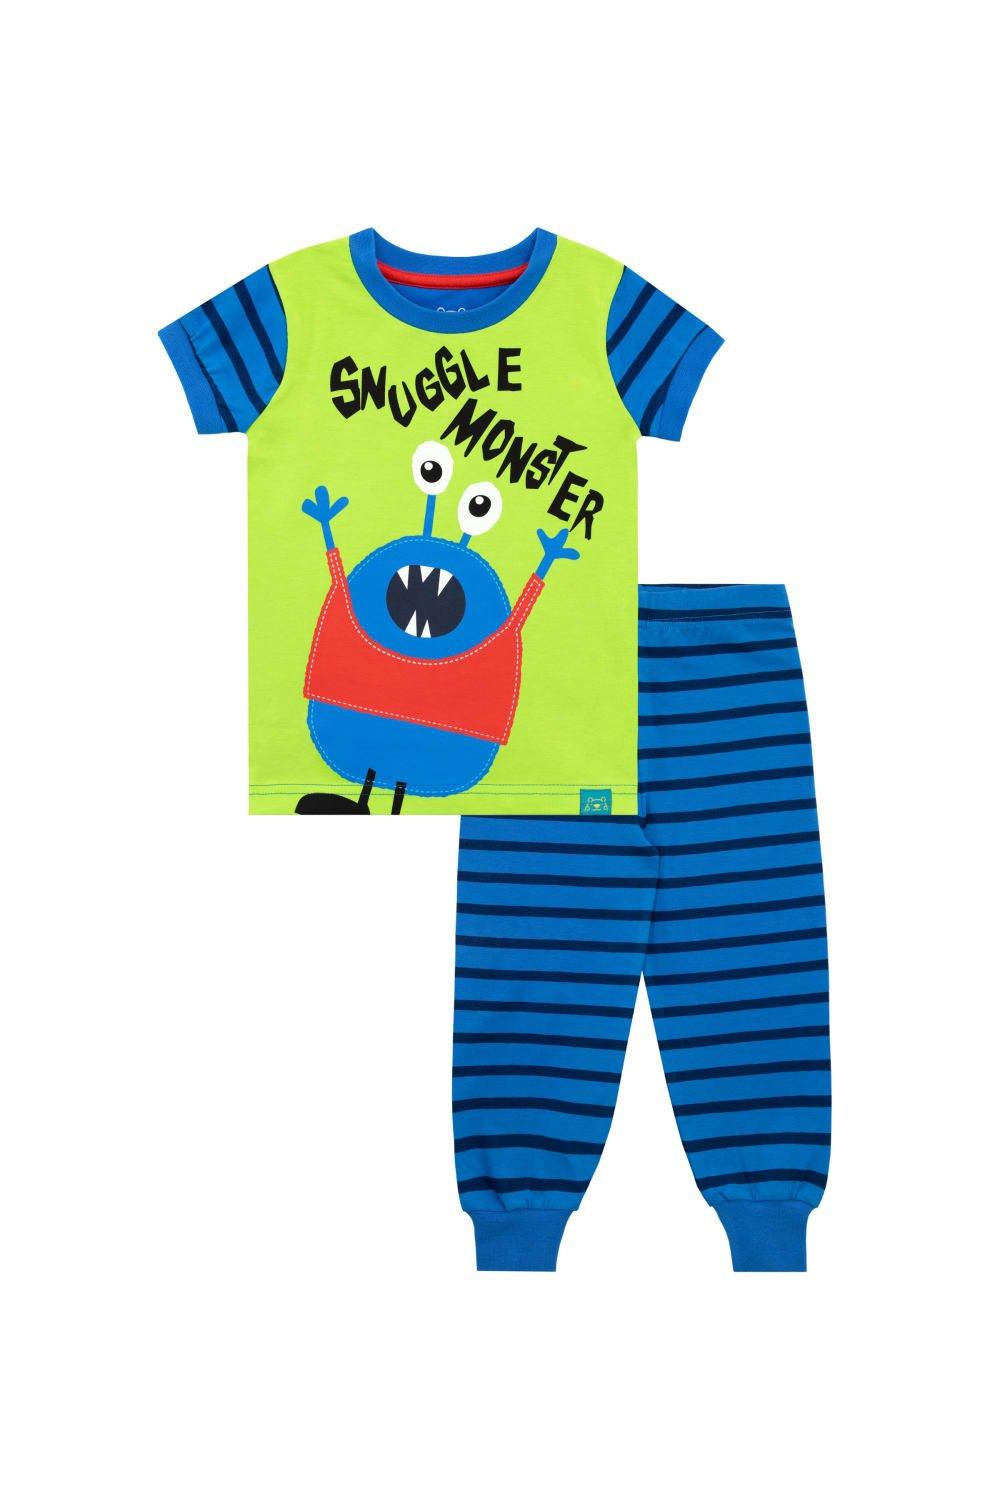 Snuggle Monster Cosy Snuggle Fit Pyjamas